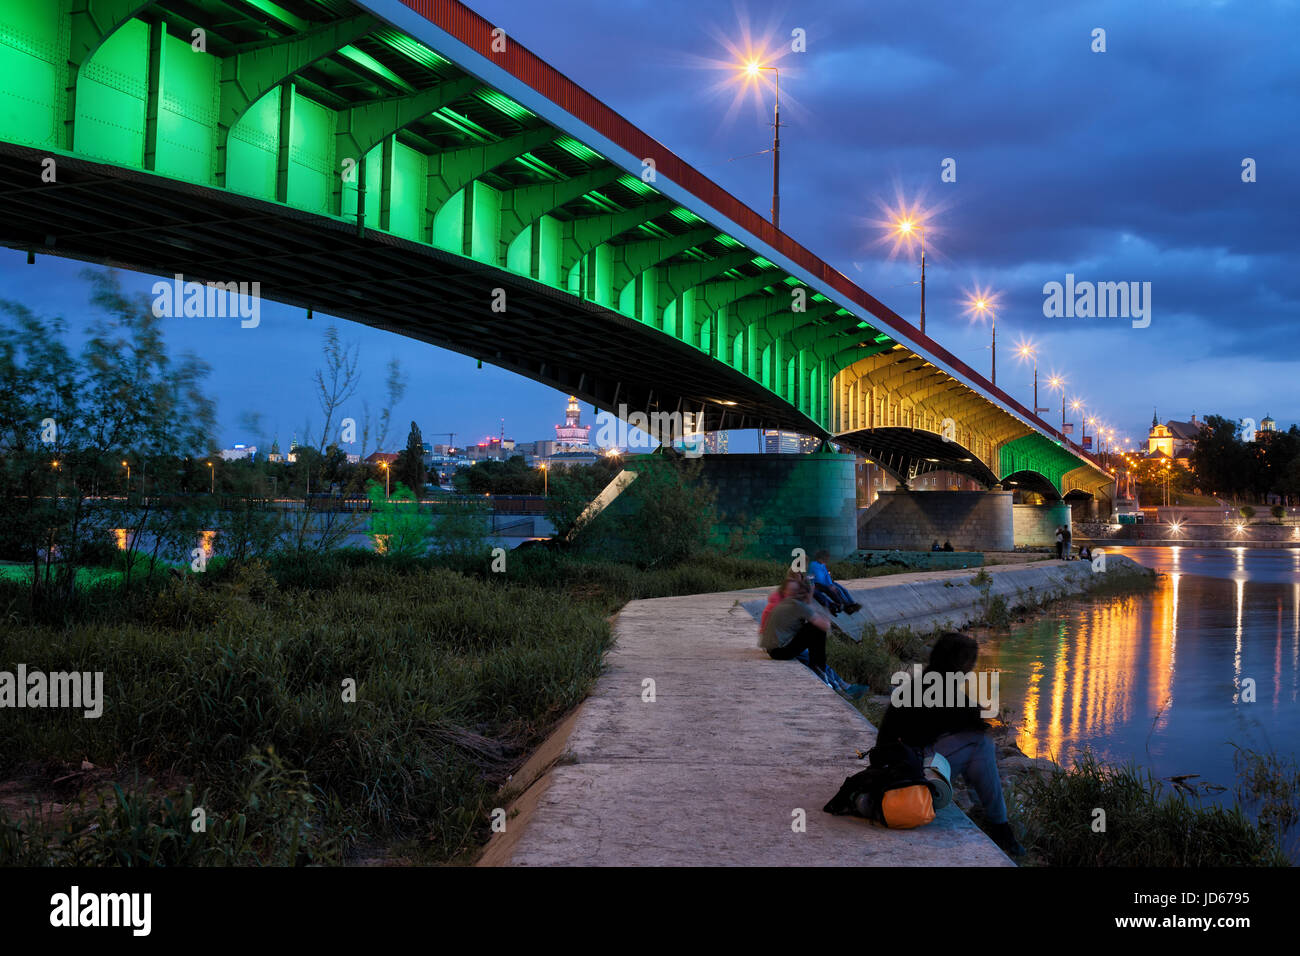 Poland, city of Warsaw, illuminated Slasko-Dabrowski Bridge and pier on Vistula River at dusk Stock Photo